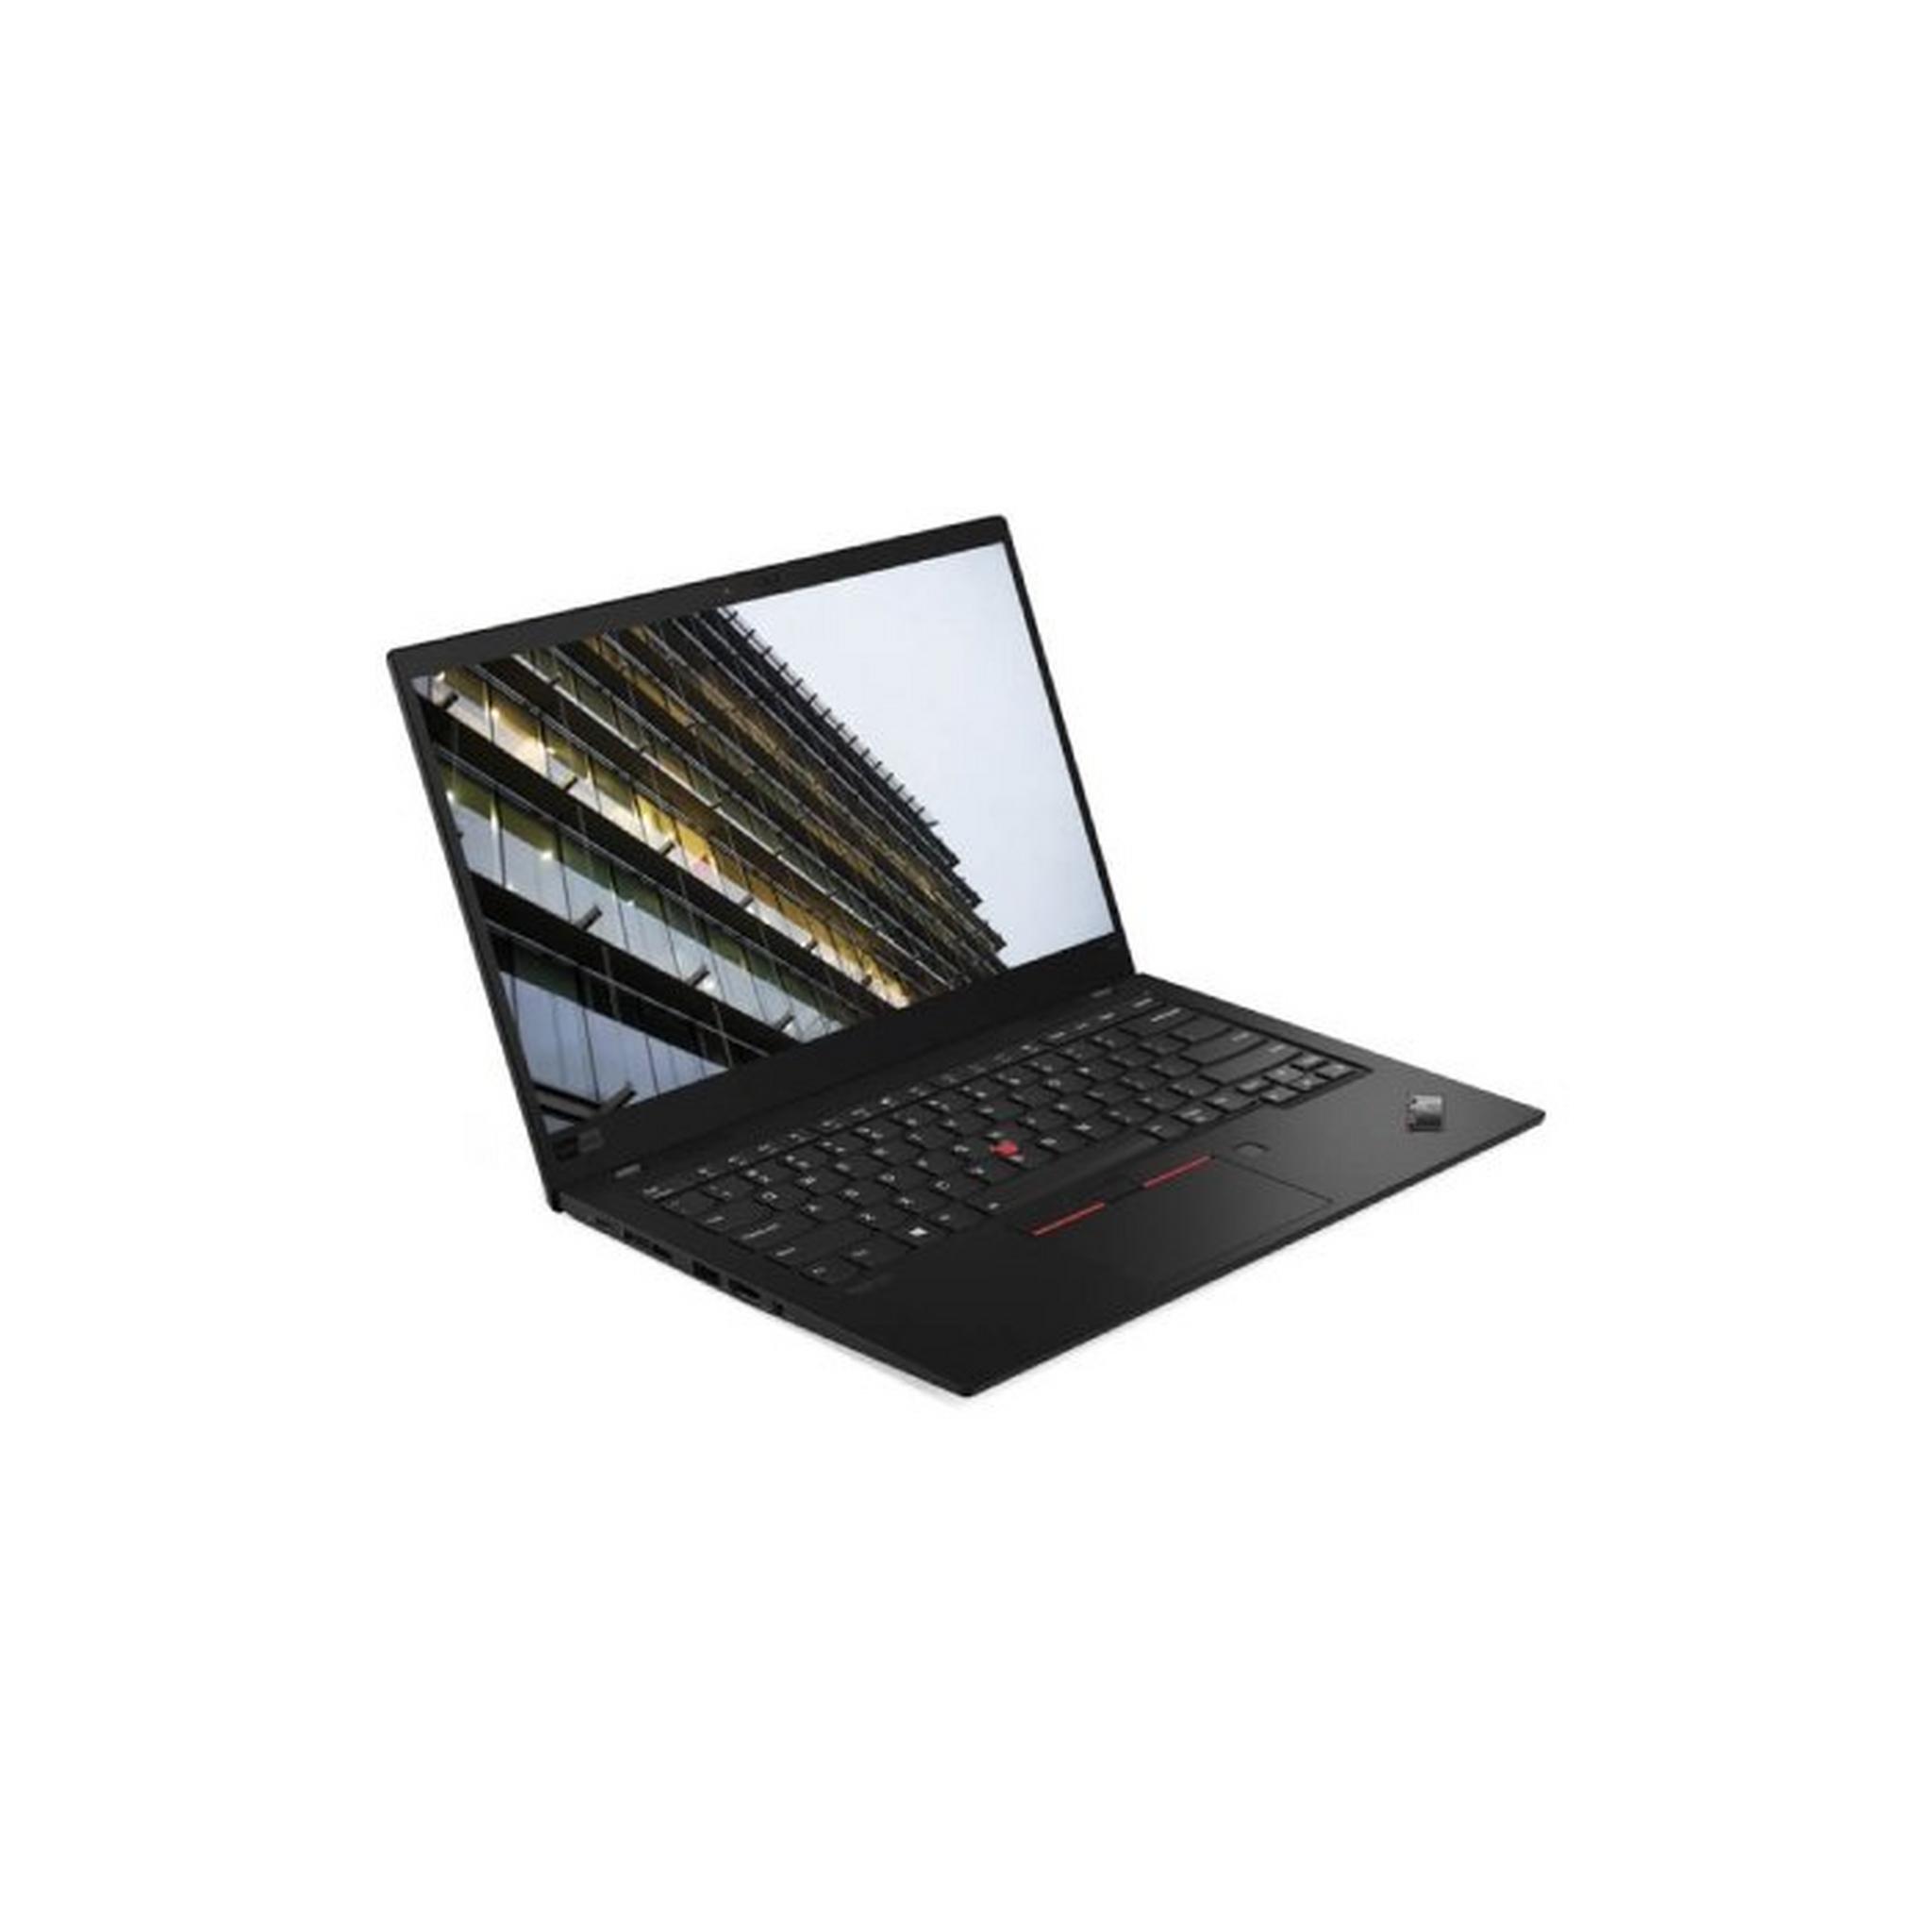 Lenovo X1 Carbon intel core i7, Ram 16GB, Storage 512GB 14-inch Laptop - Black